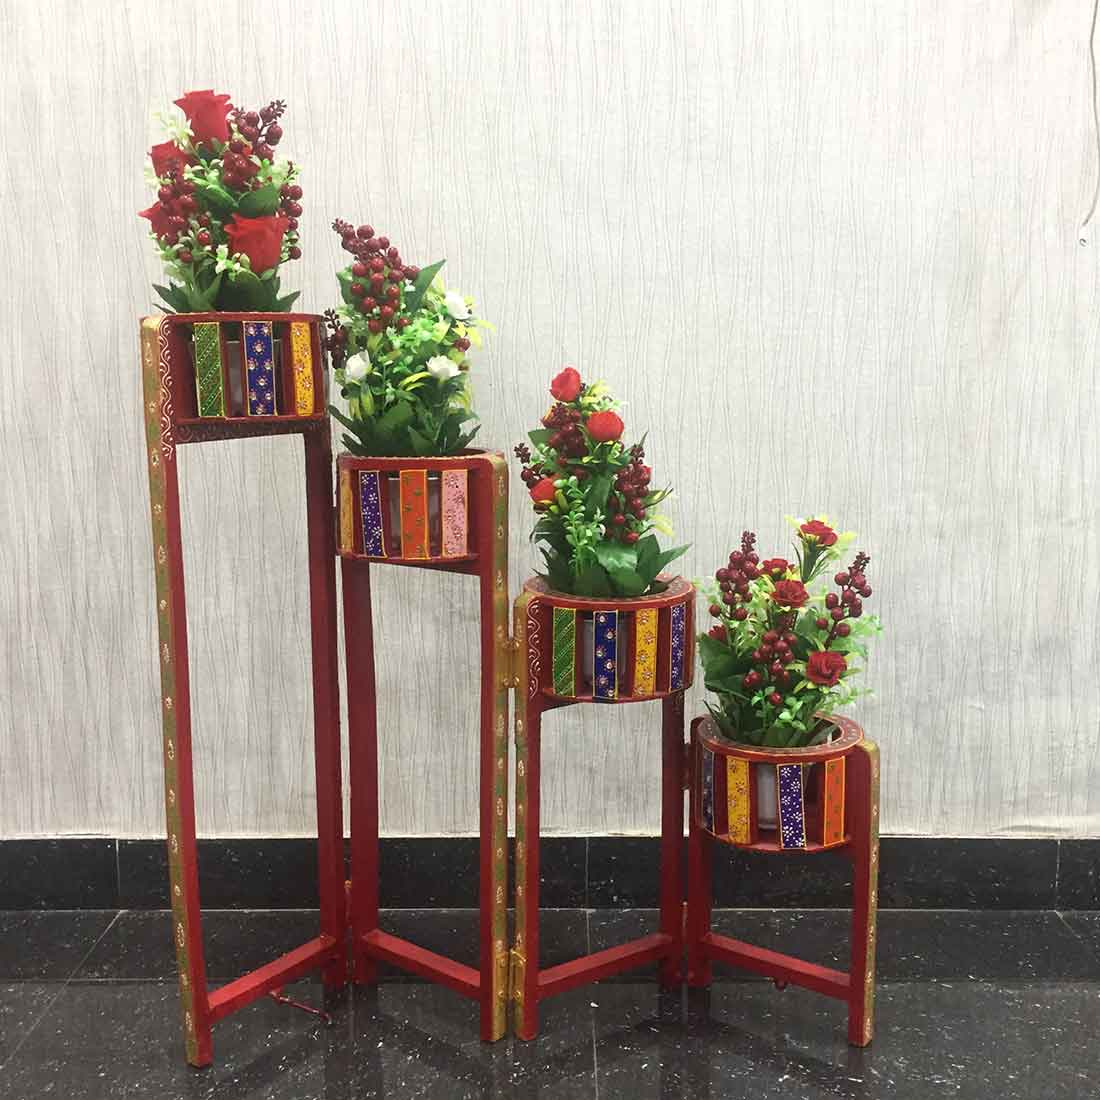 Wooden Flower Planter | Indoor Flower Planter - For Home Decor & Gifts - 35 Inch - ApkaMart